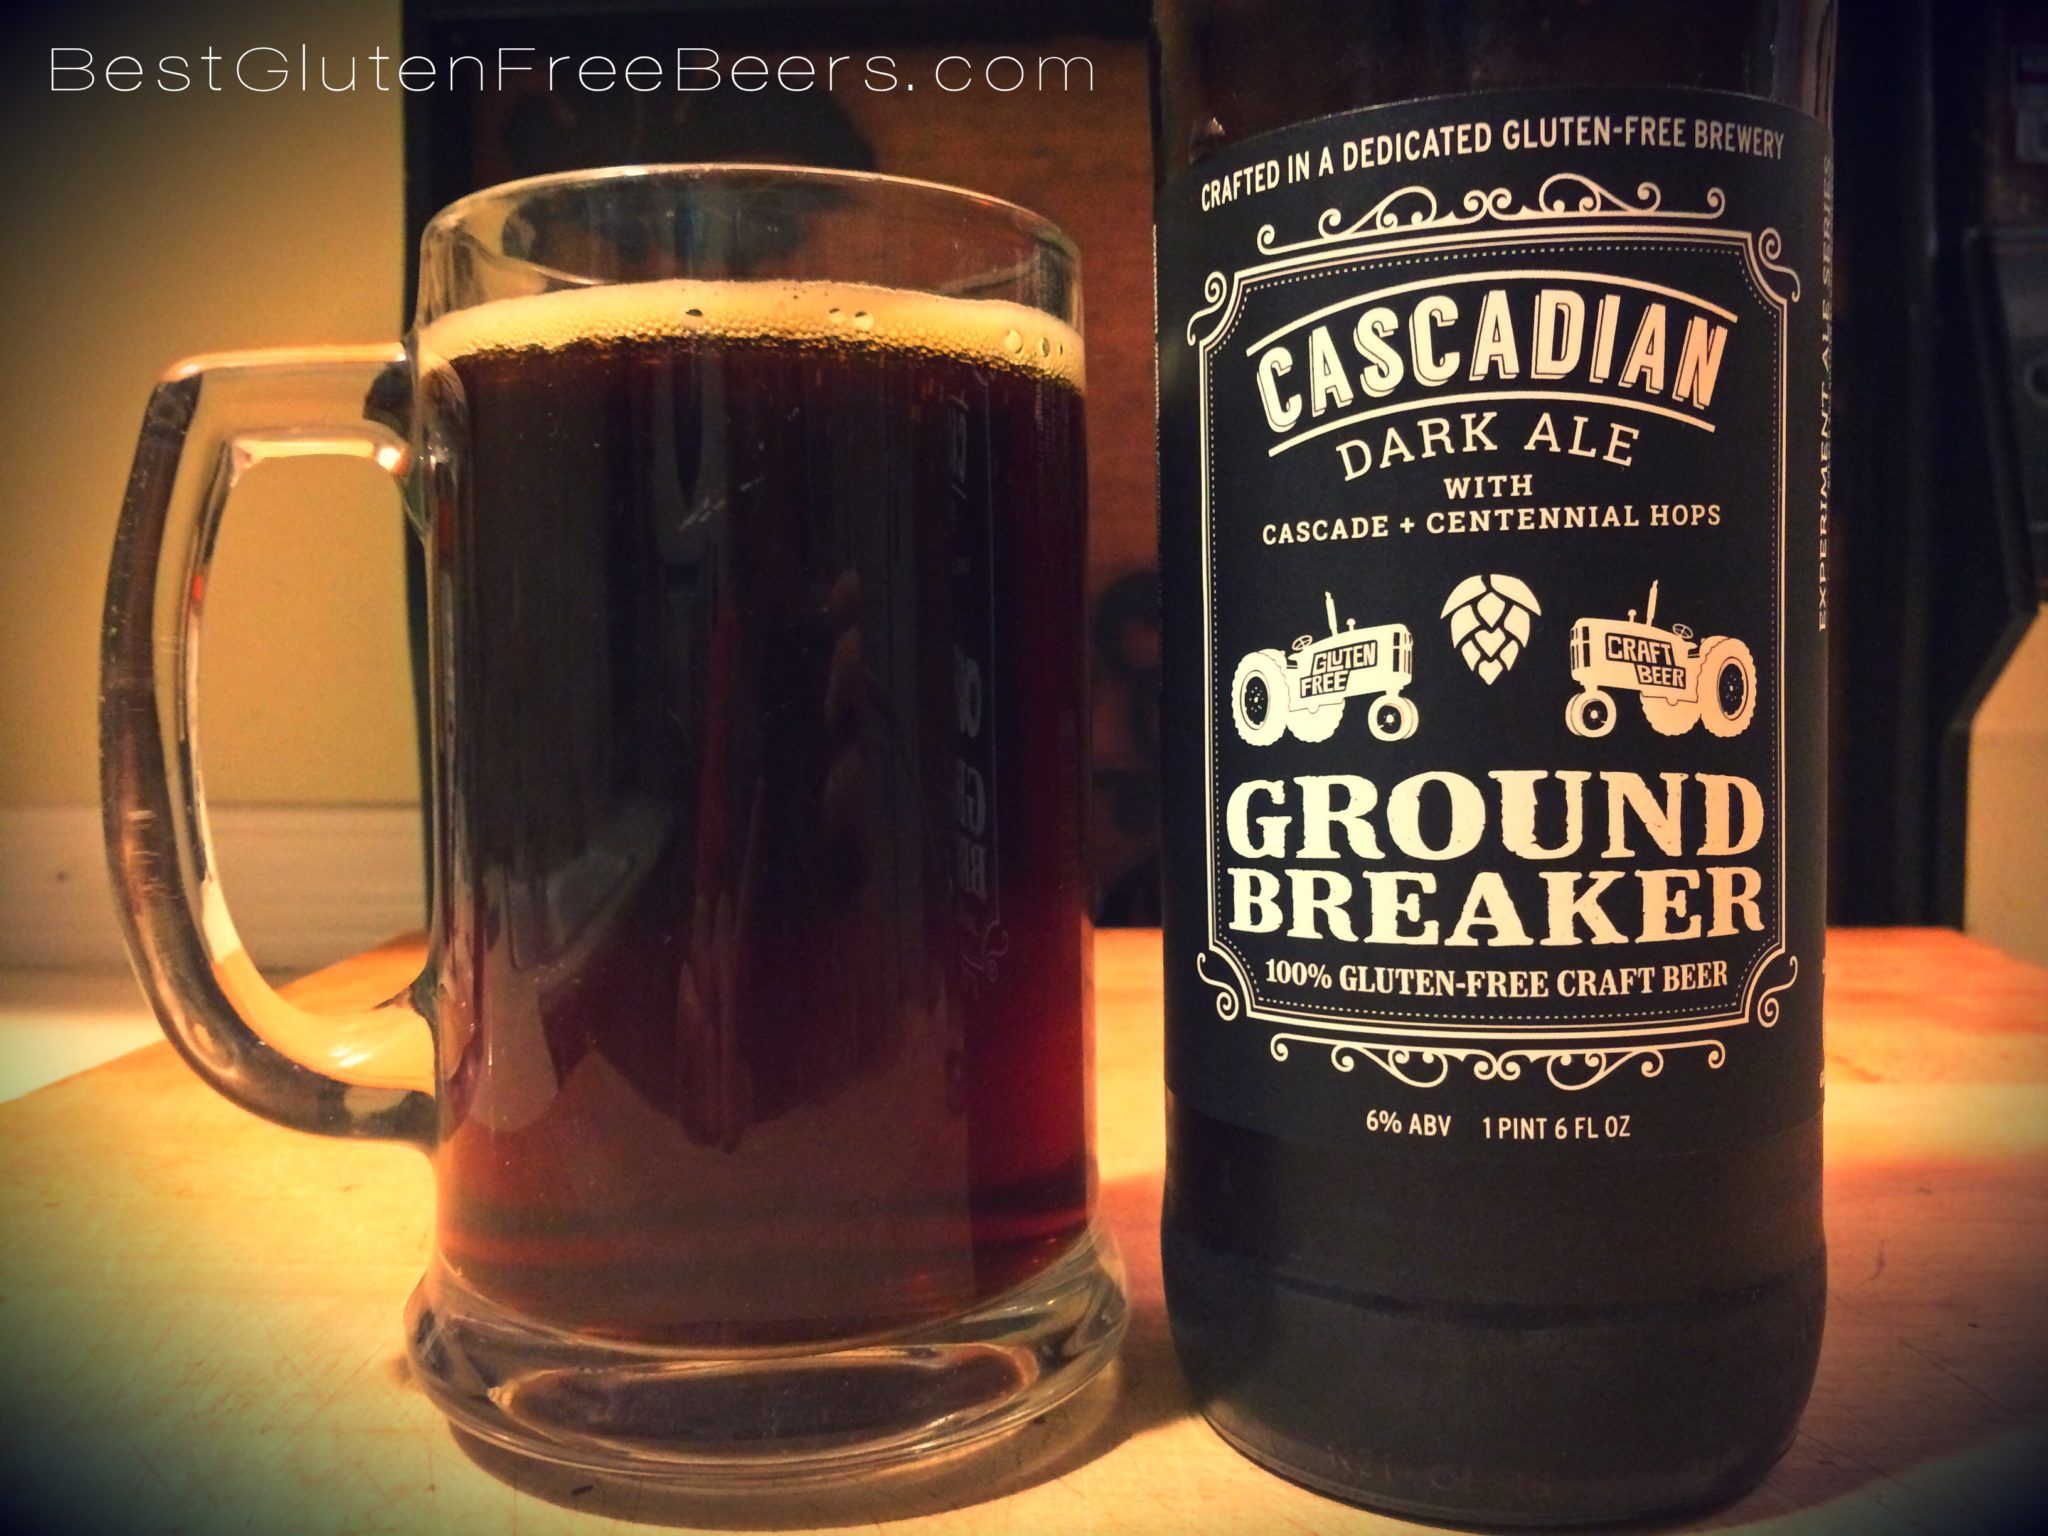 Gluten Free Beer Review: Ground Breaker Cascadian Dark Ale